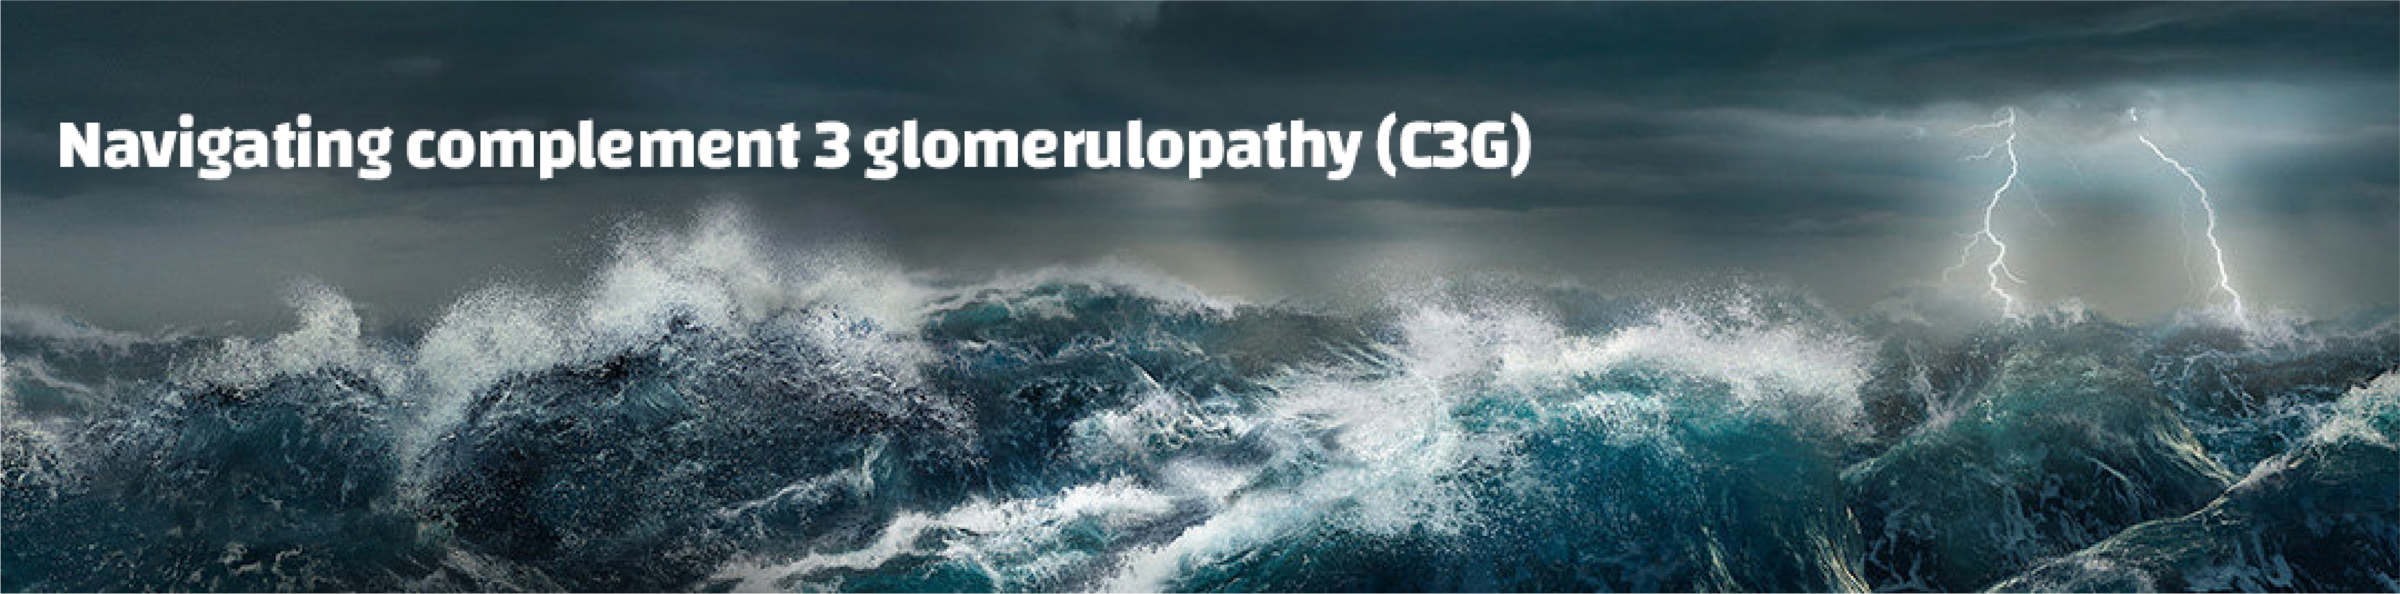 Navigating complement 3 glomerulopathy (C3G)